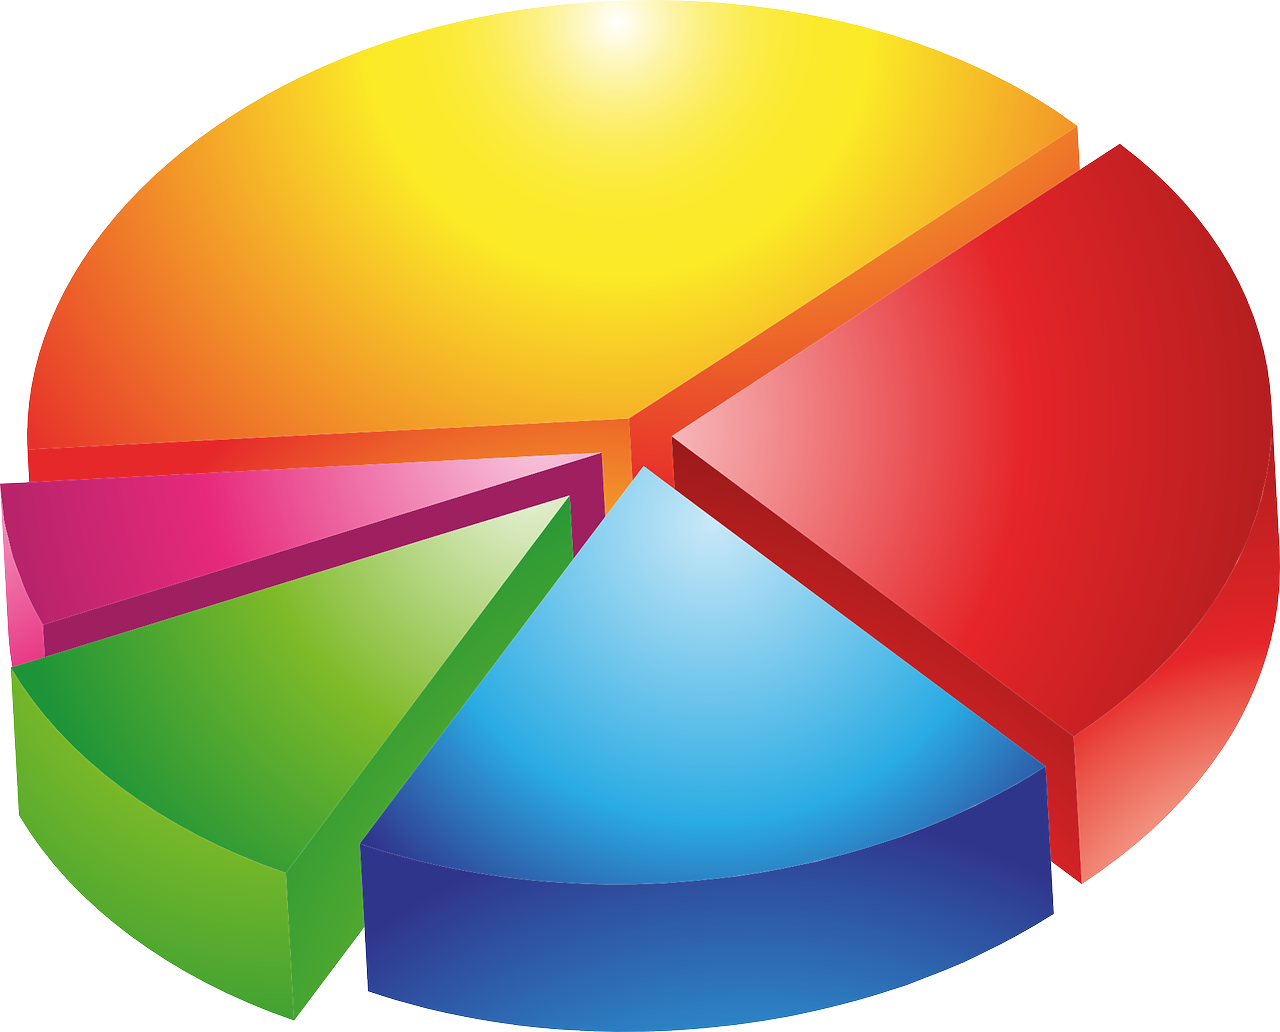 Kreisdiagramm (c) Open Clipart-Vectors, pixabay